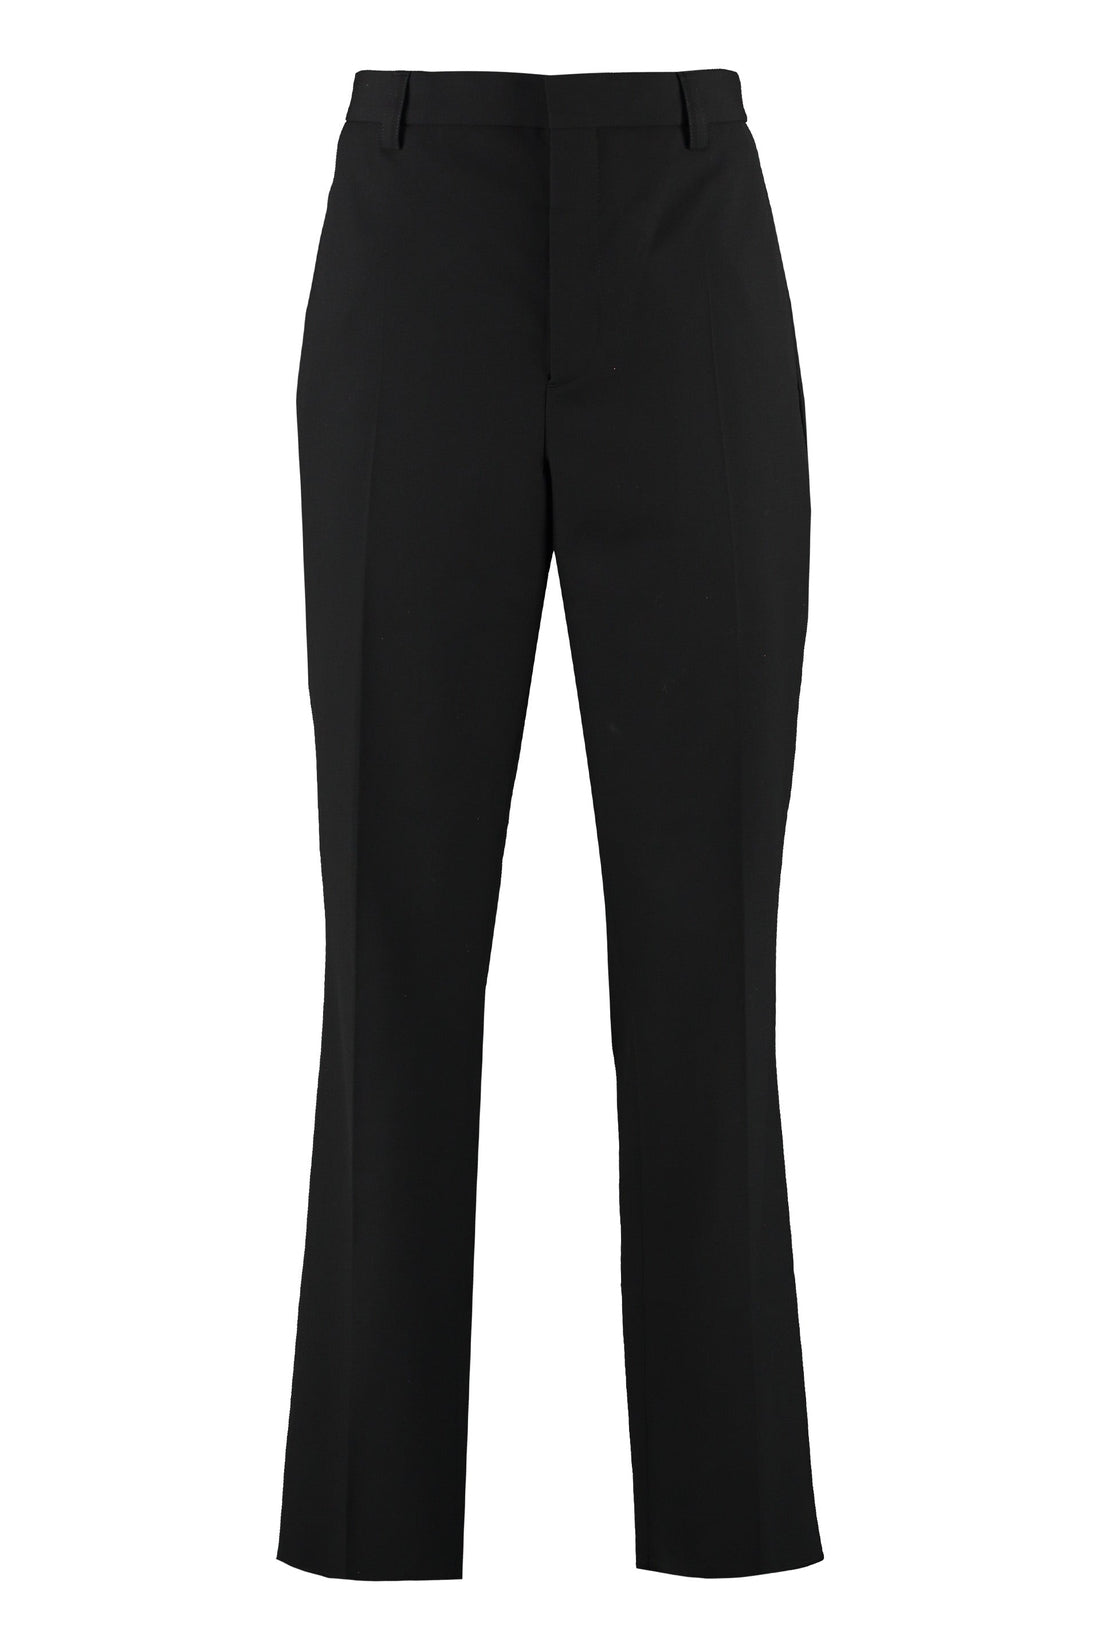 Nanushka-OUTLET-SALE-Jun tailored trousers-ARCHIVIST